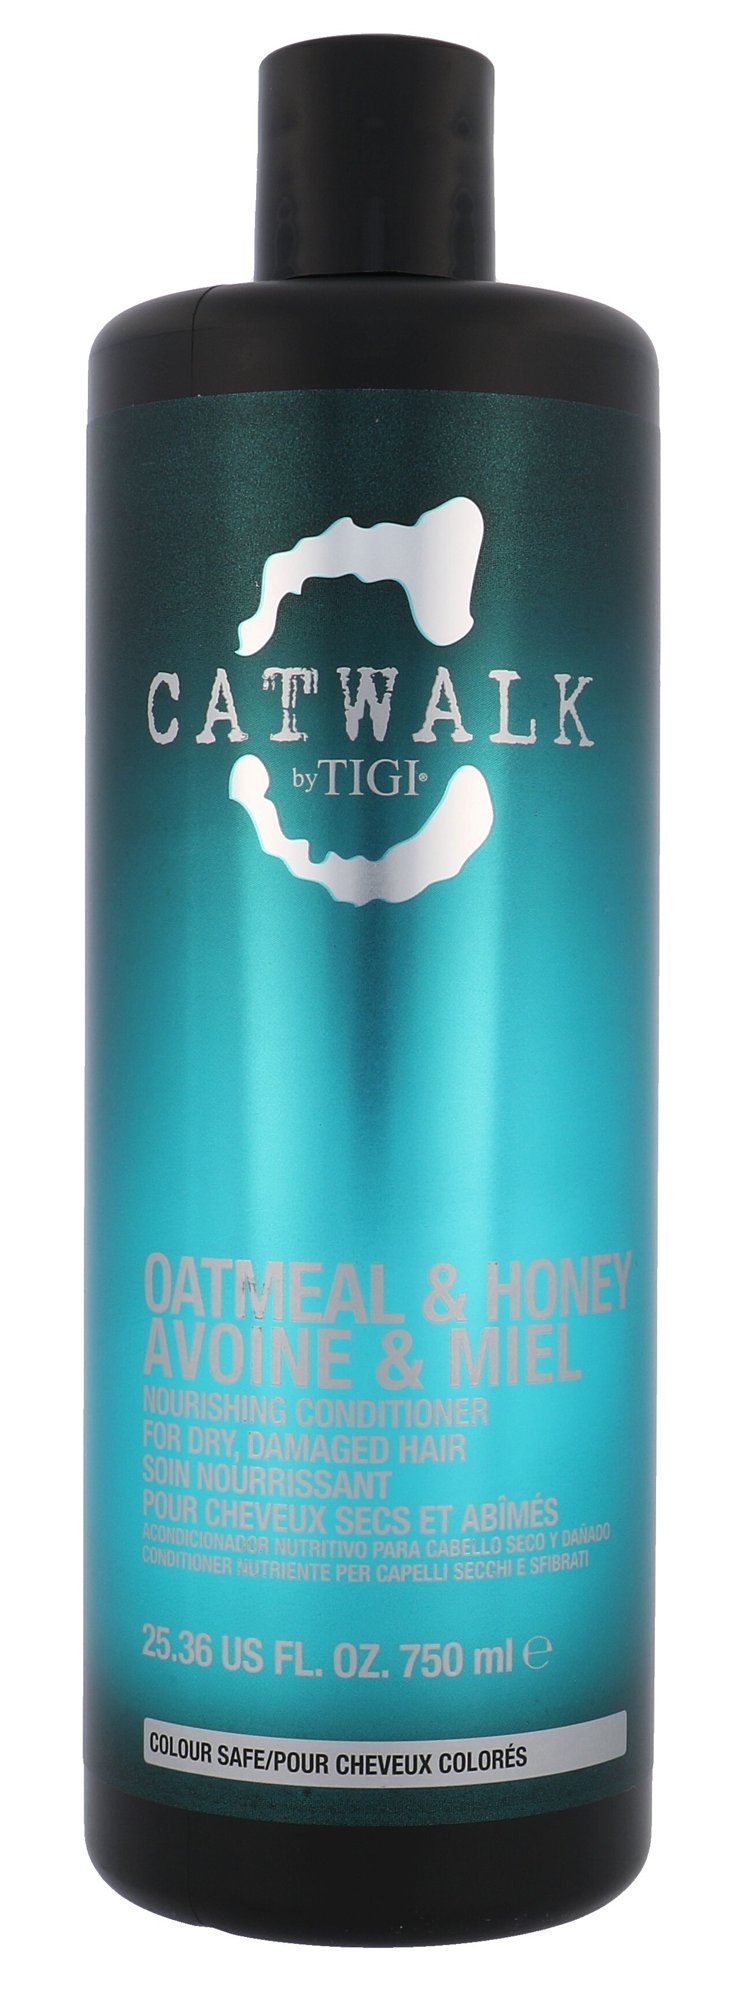 Tigi Catwalk Oatmeal & Honey kondicionierius